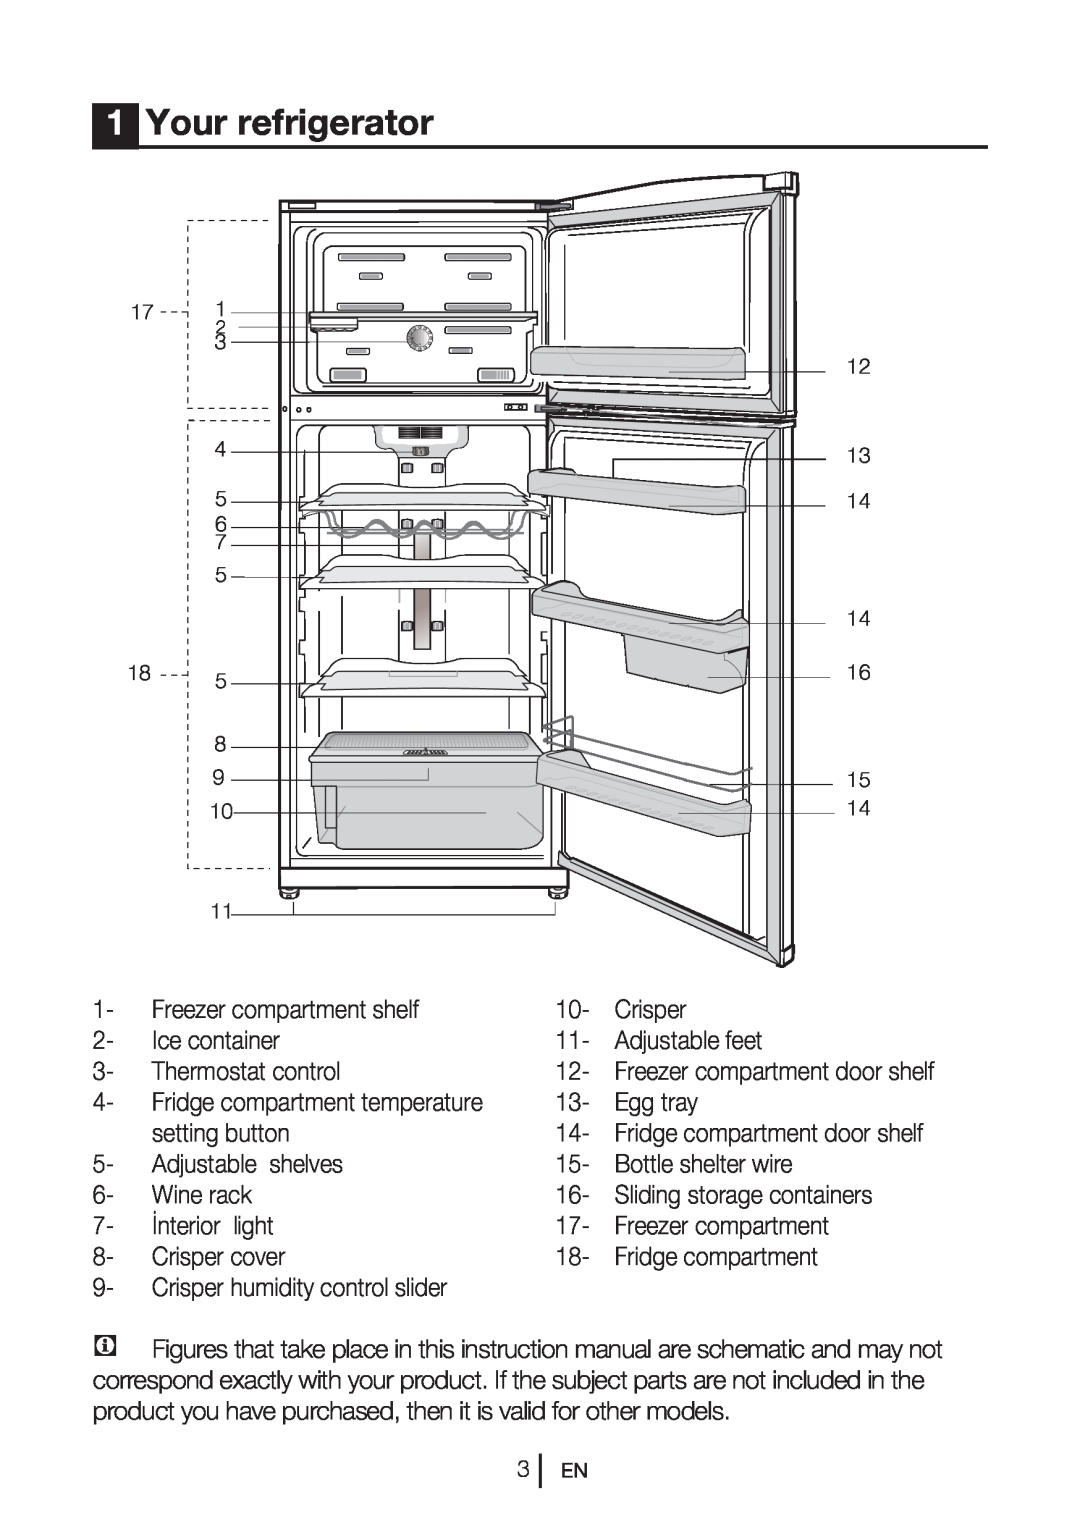 Beko DN 133020 manual Your refrigerator, Freezer compartment door shelf, Fridge compartment door shelf 